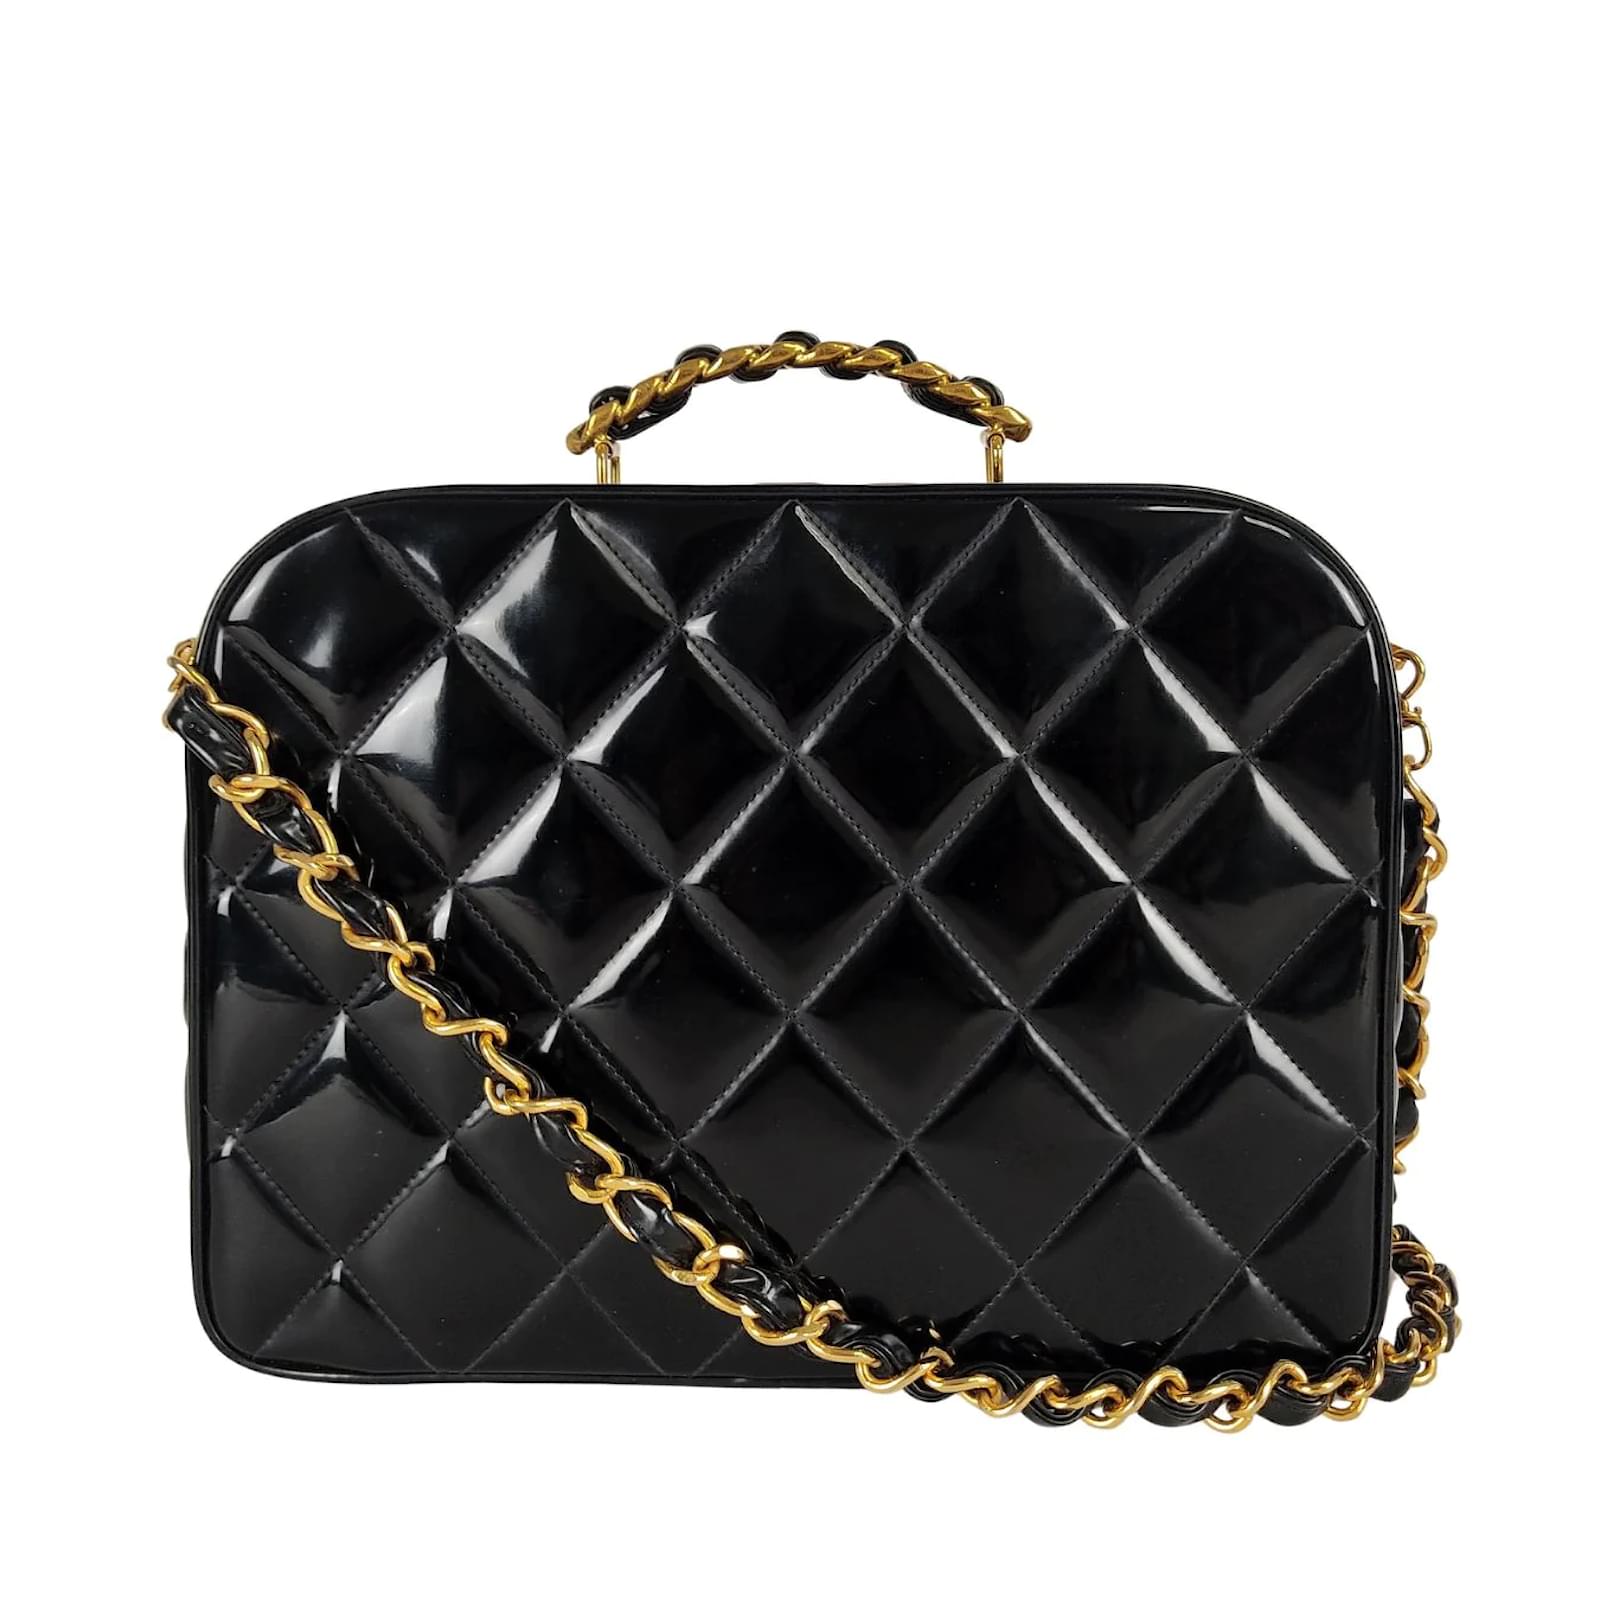 Black Chanel CC Matelasse Patent Leather Vanity Bag, RvceShops Revival